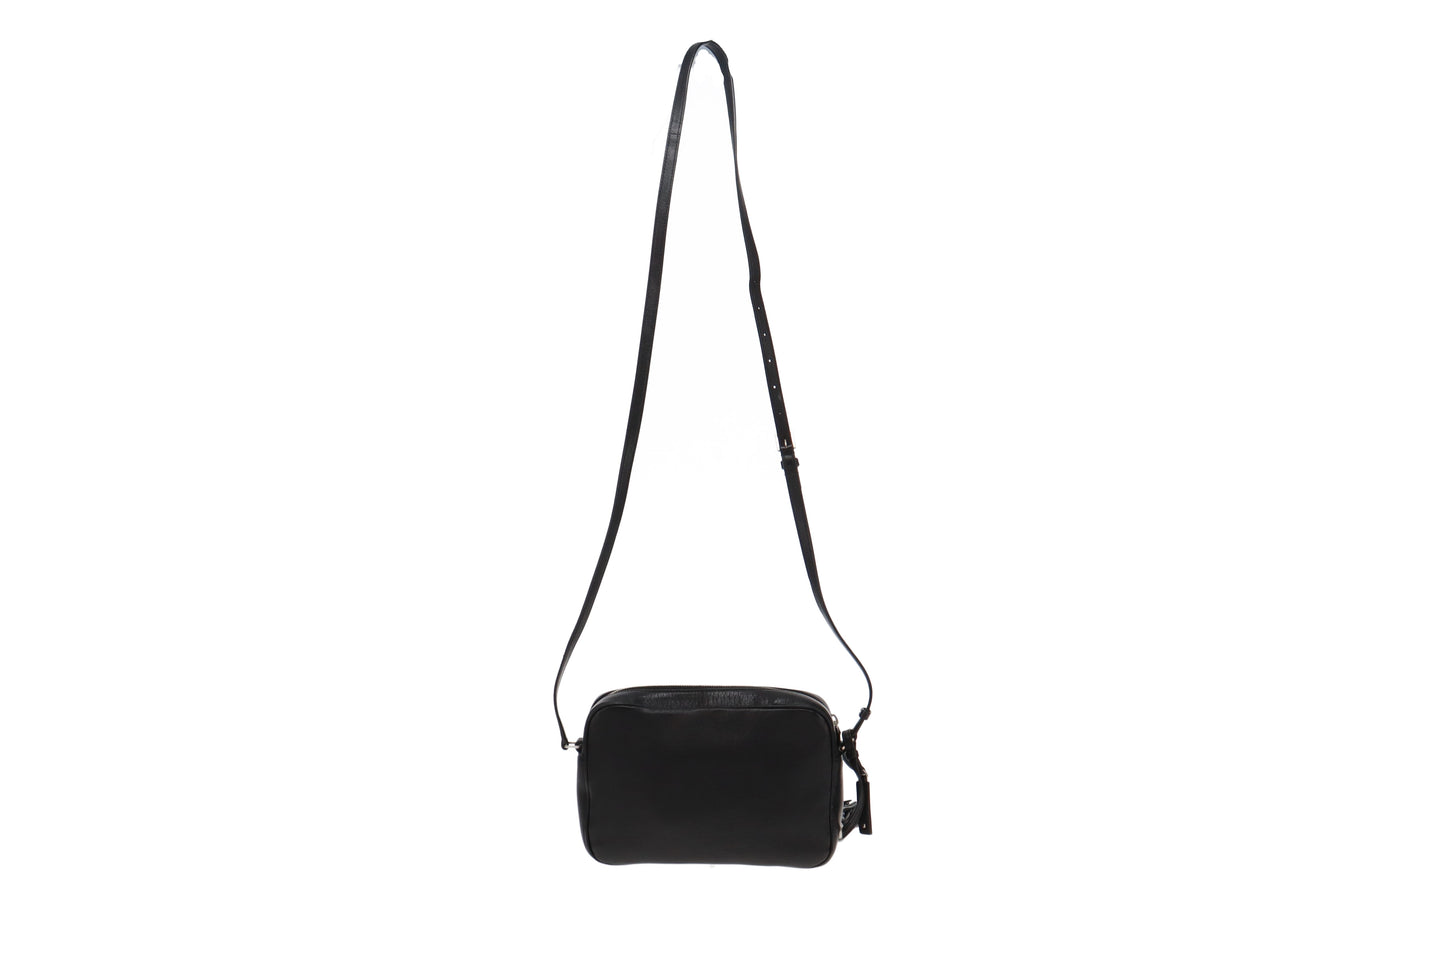 Saint Laurent Black Smooth Leather Lou Camera Bag